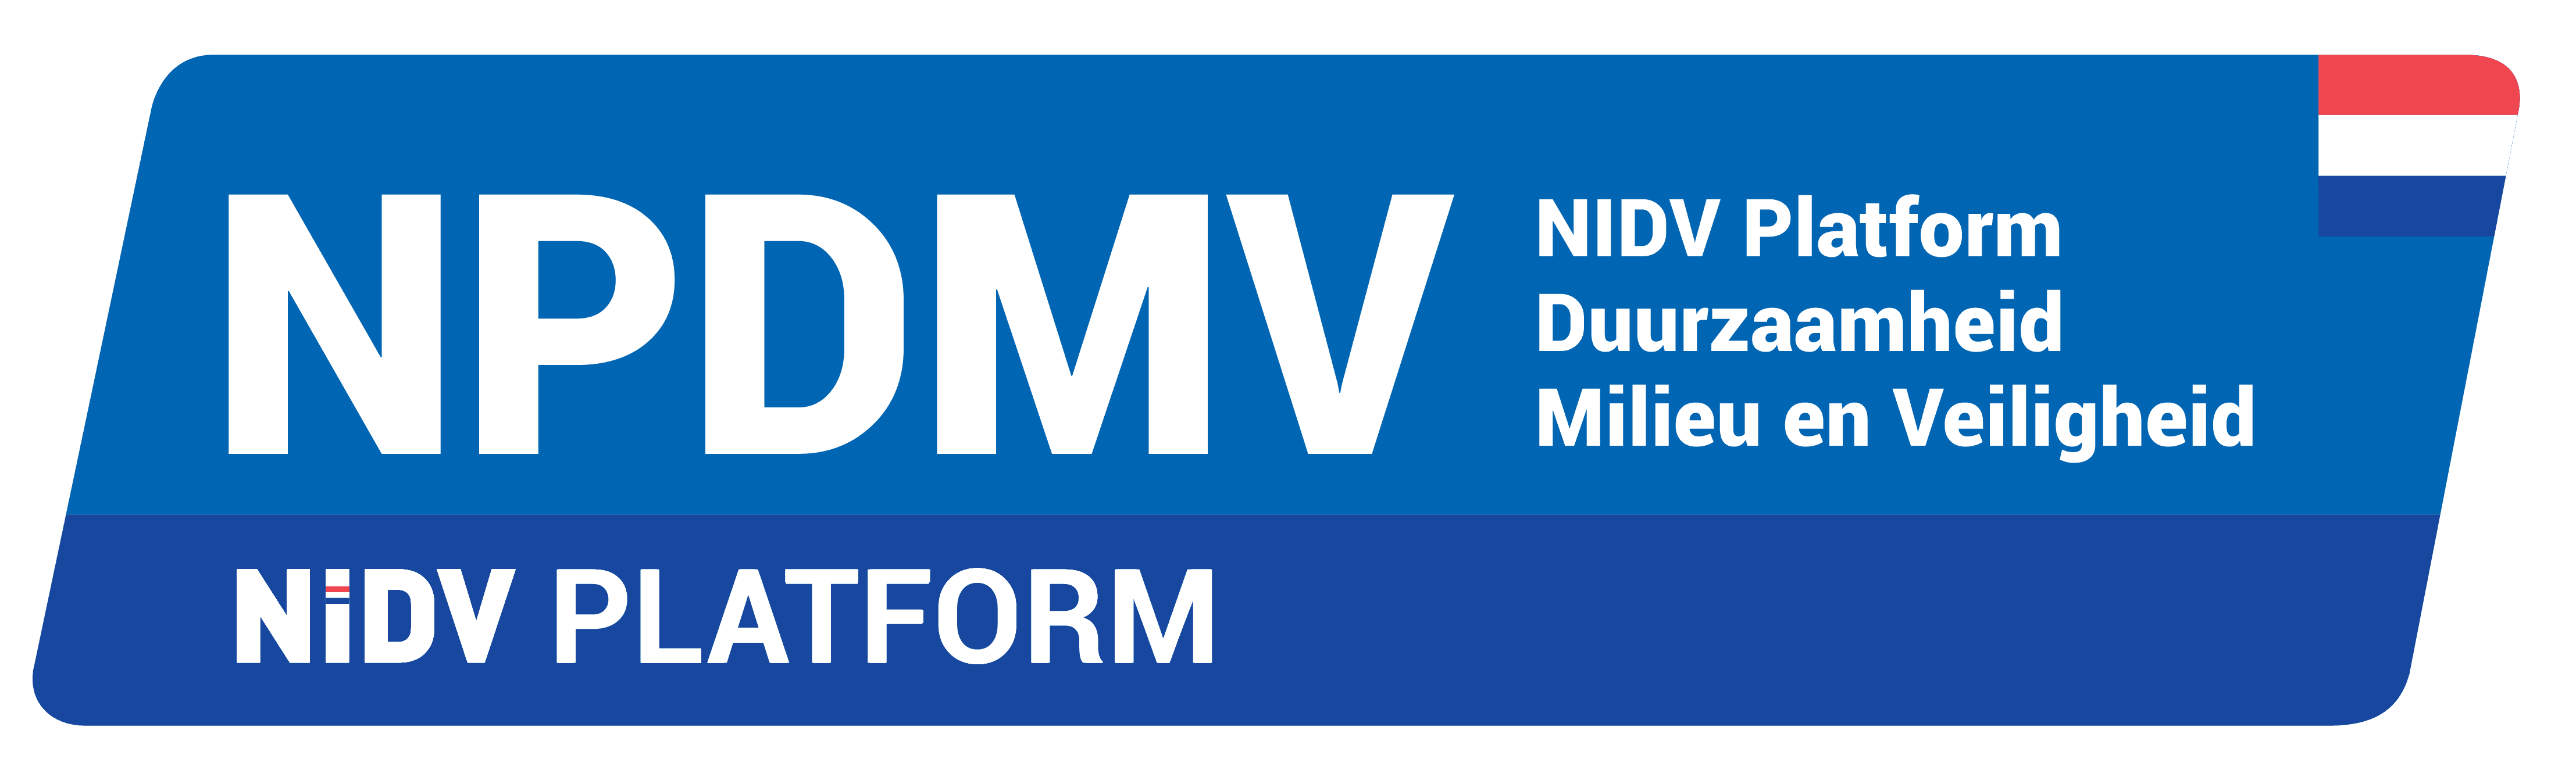 Logo NPDMV-01